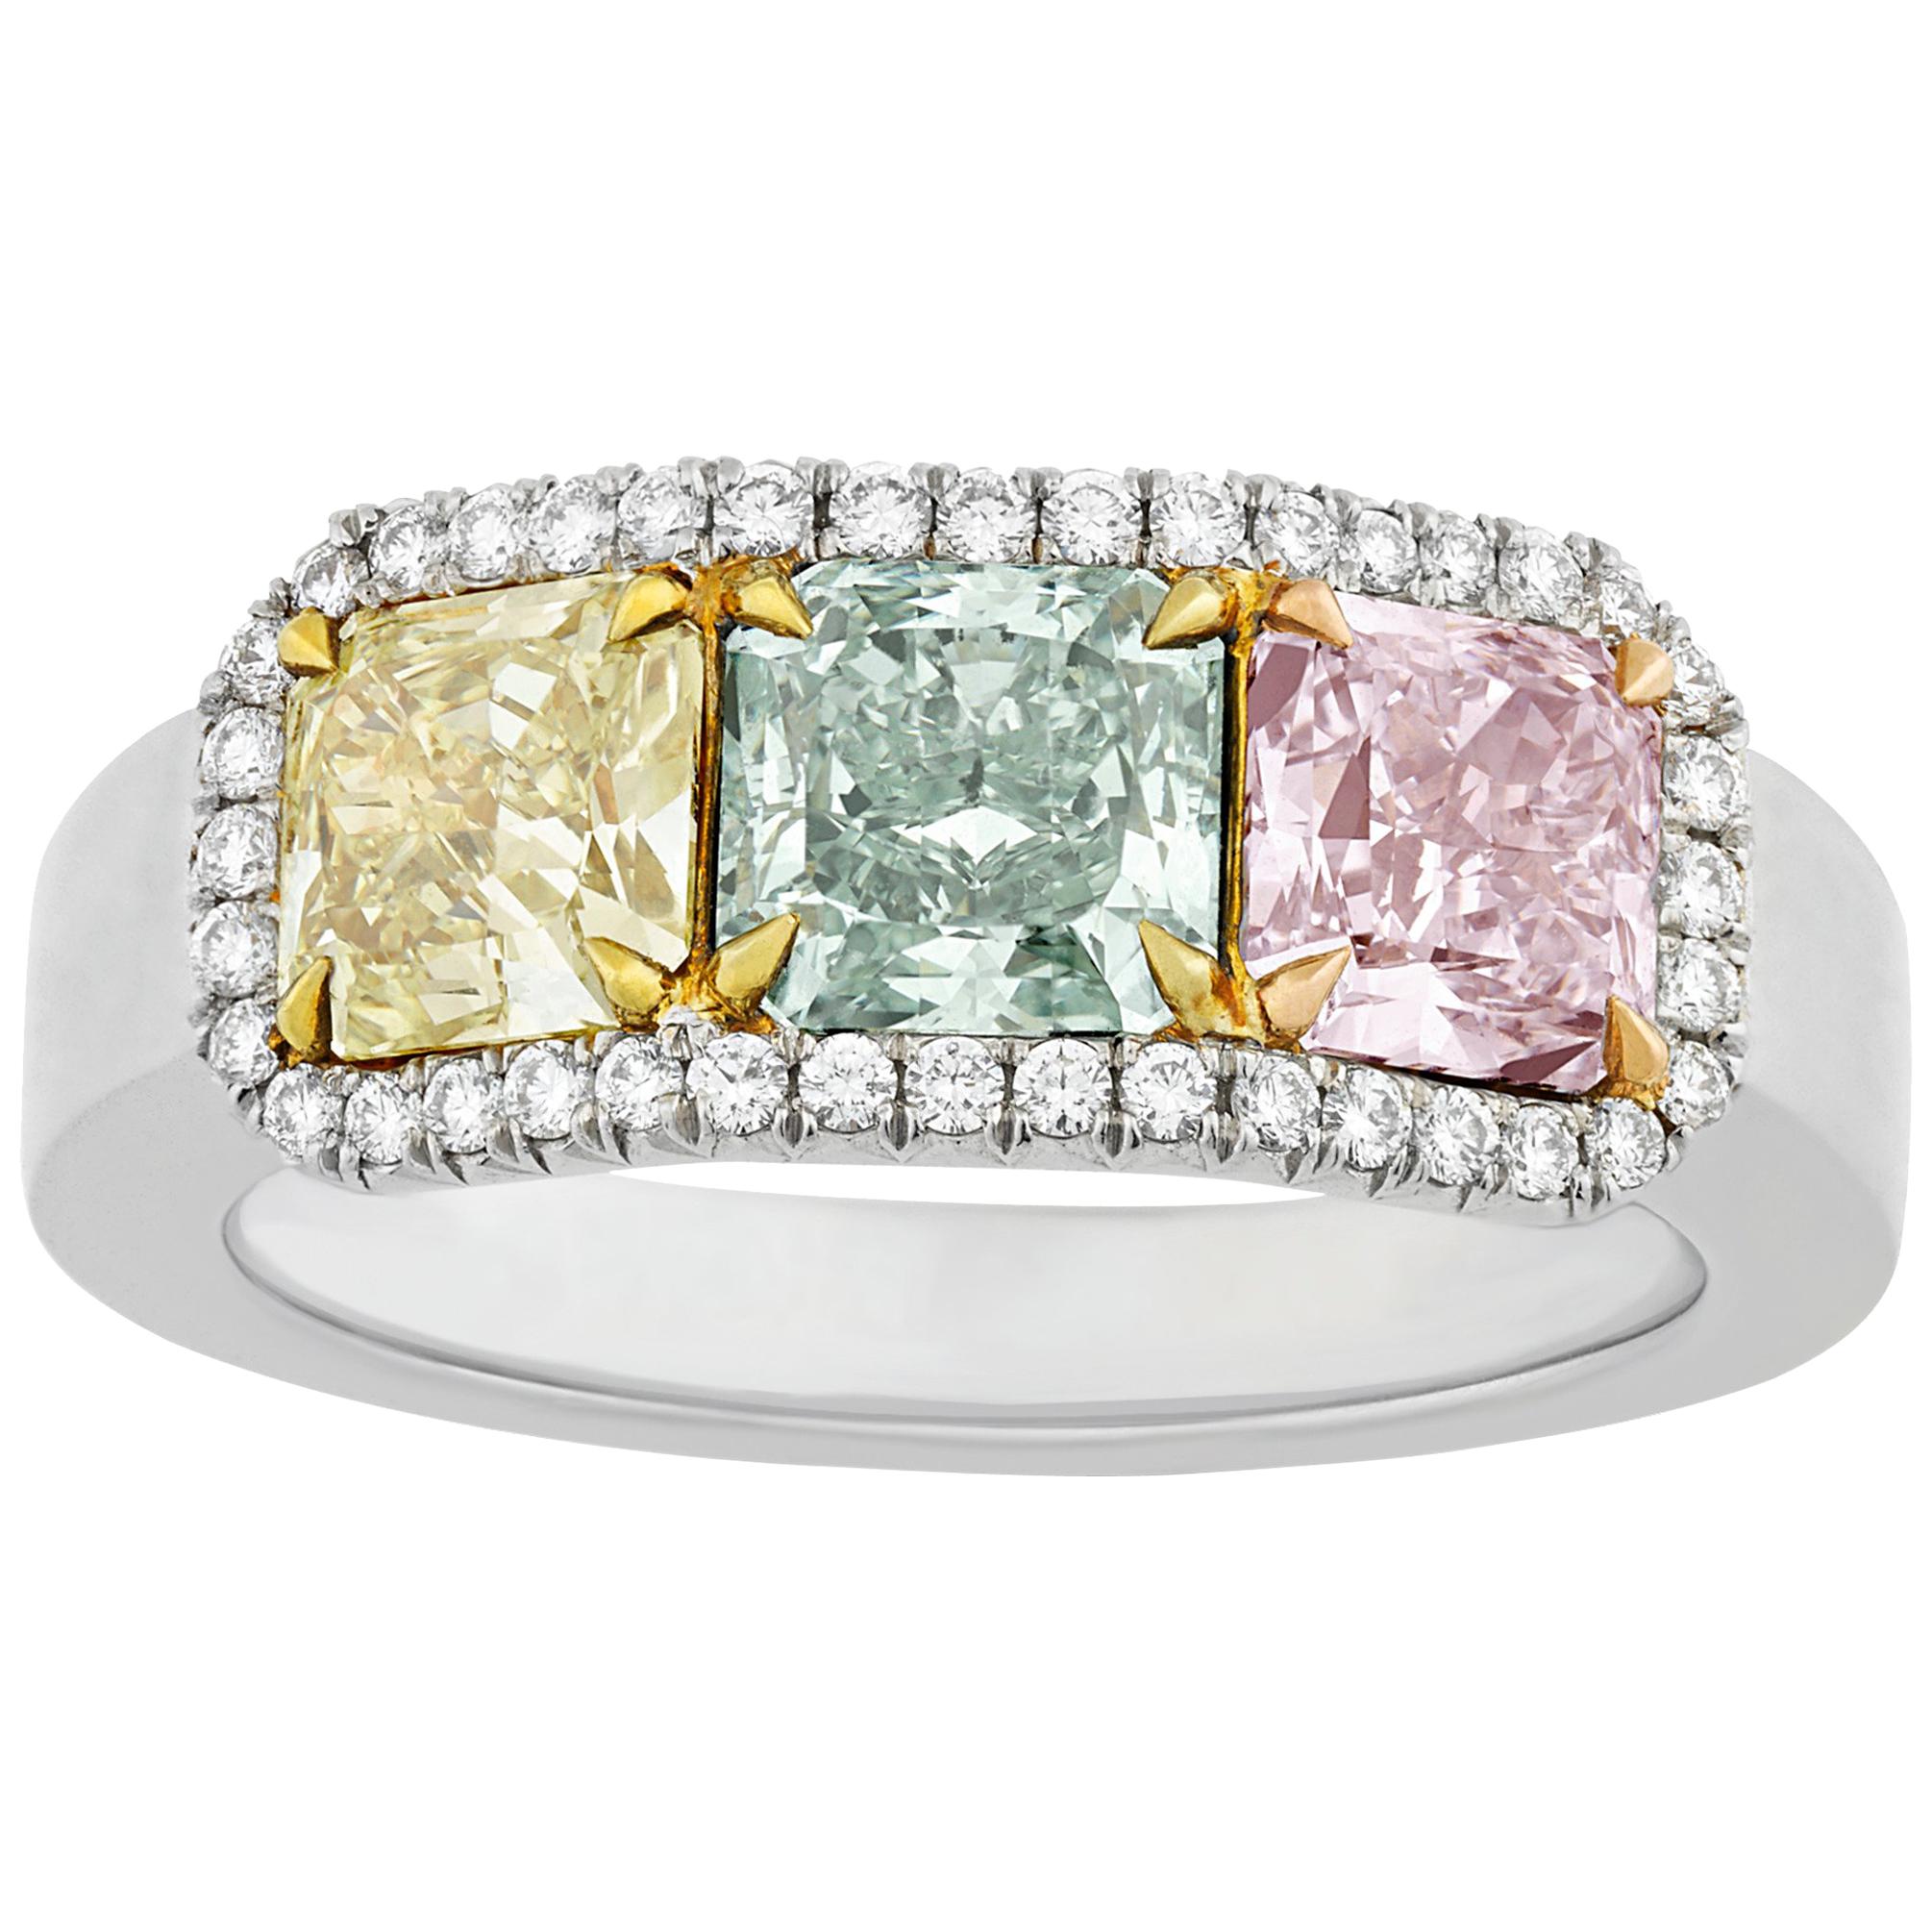 Multicolored Diamond Ring, 2.56 Carat